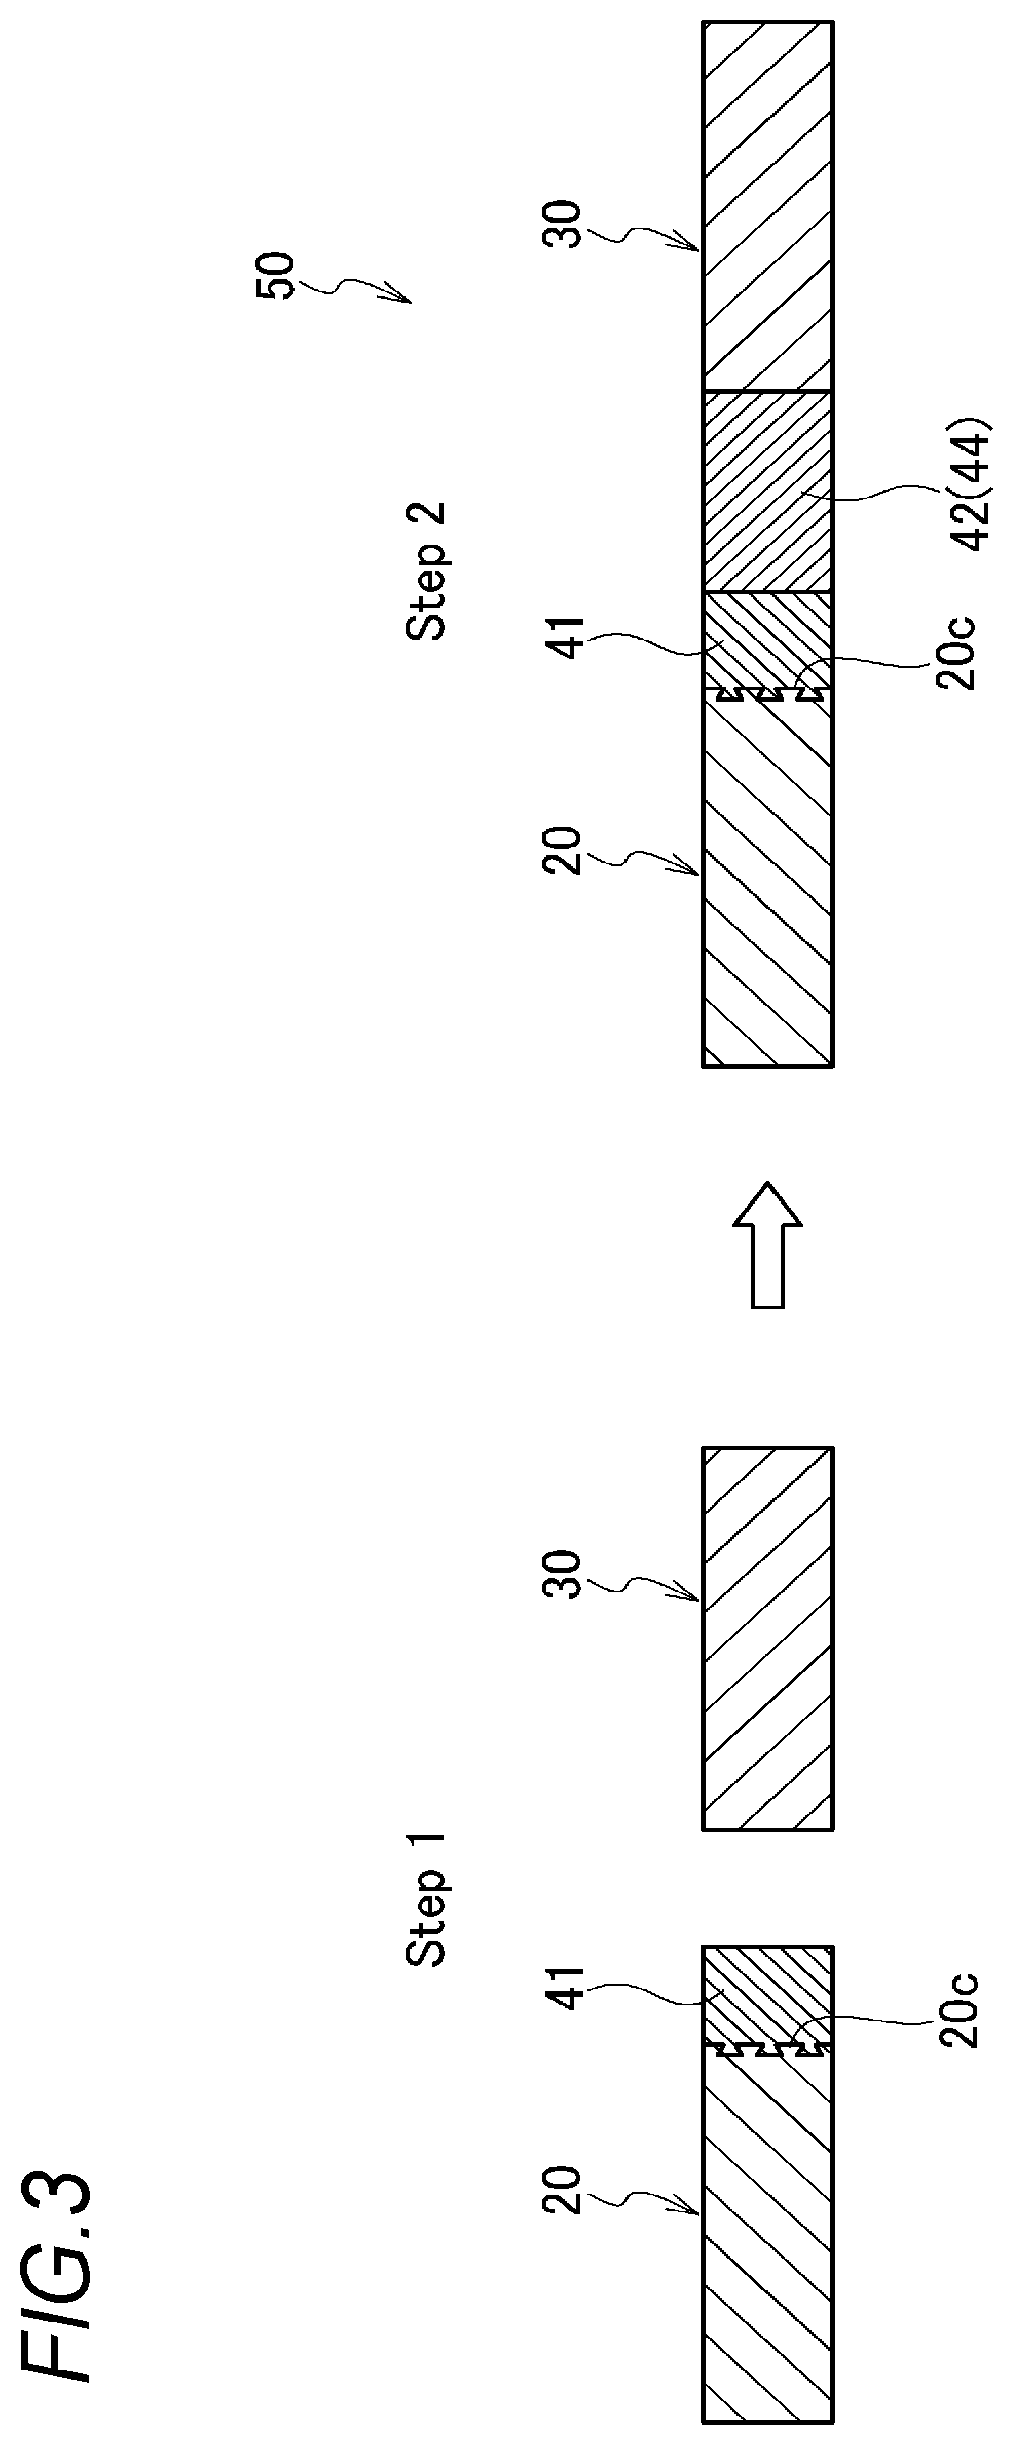 Method for manufacturing heterometallic assembly and heterometallic assembly